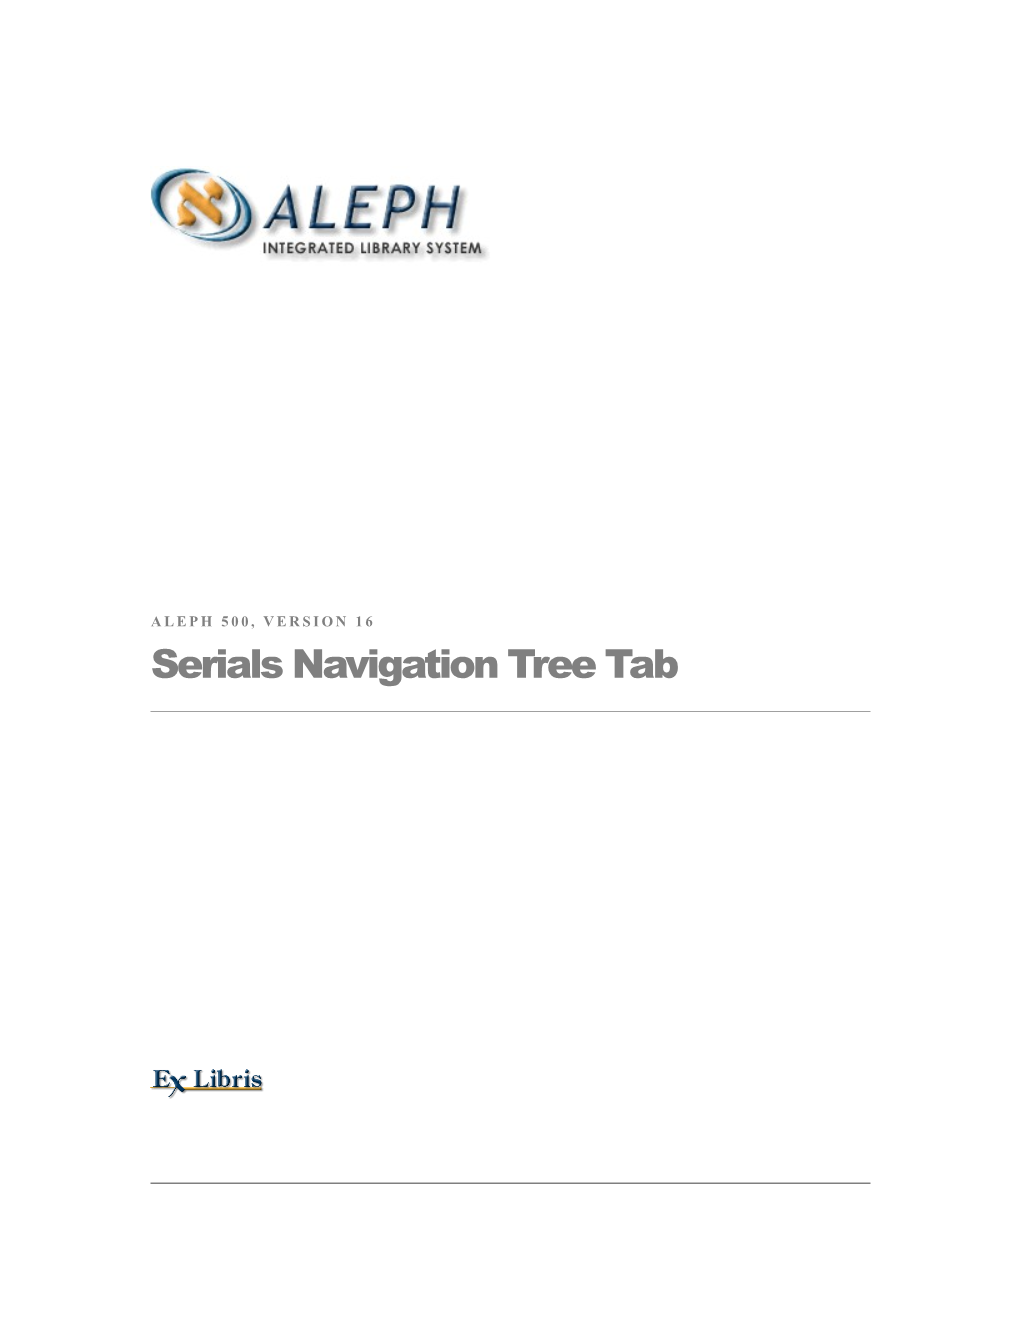 Serials Navigation Tree Tab 16